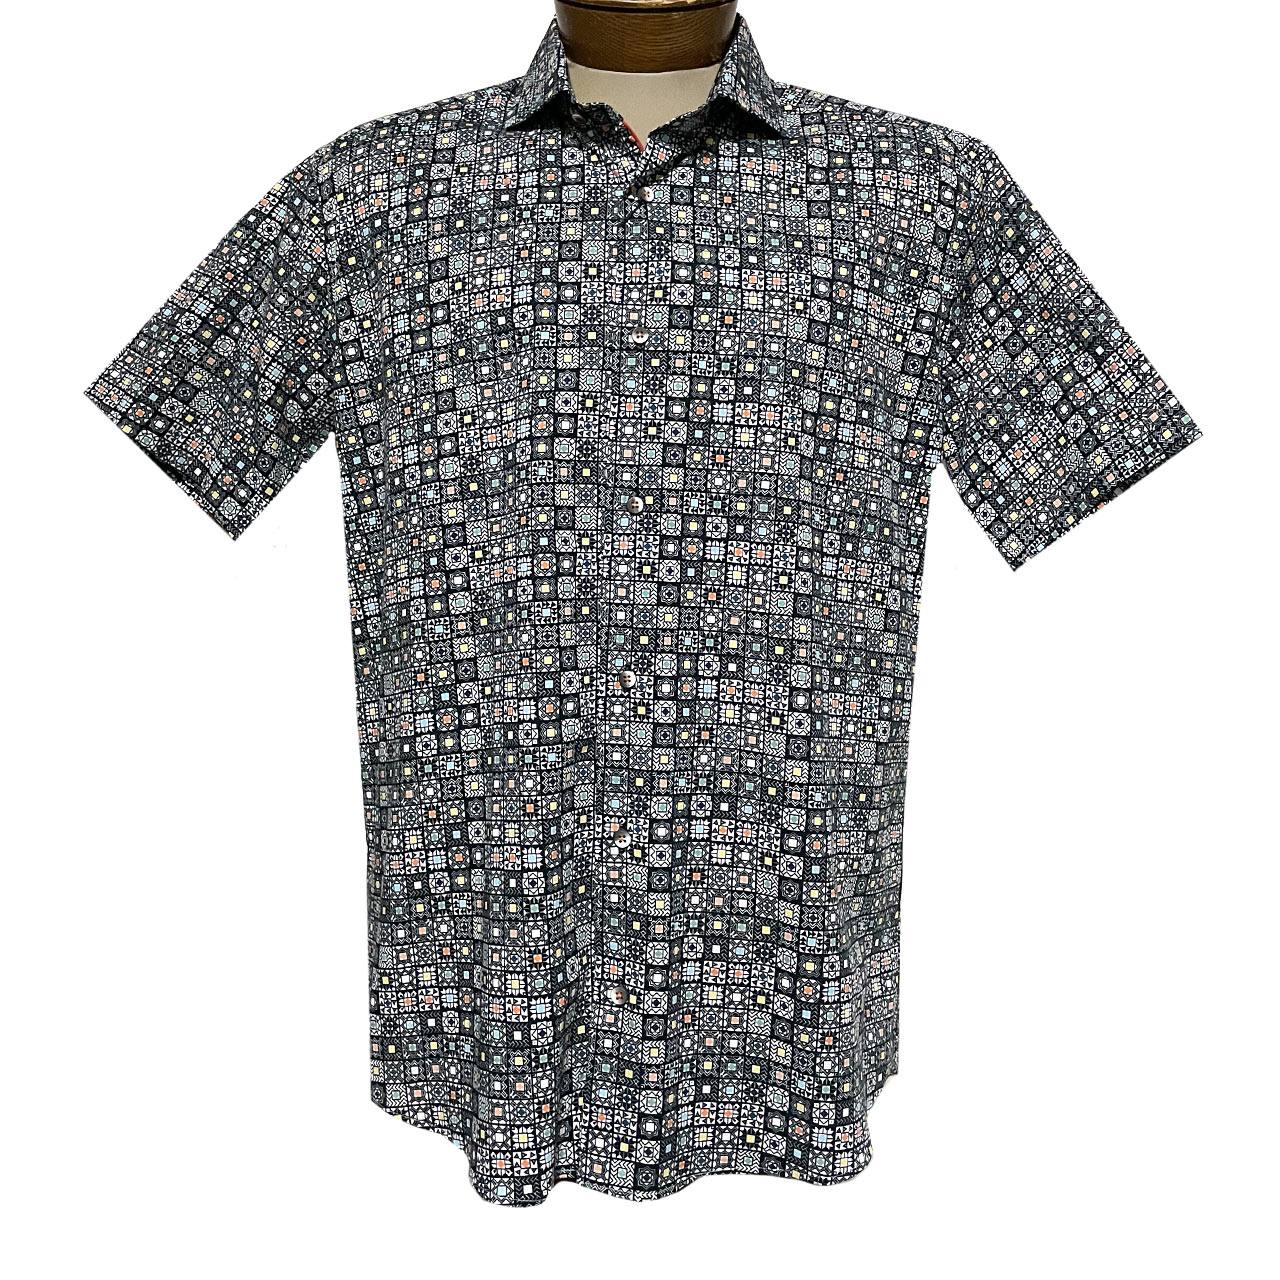 Men’s 7 Downey Street Short Sleeve Digital Print Sport Shirt, Aspin Black Multi